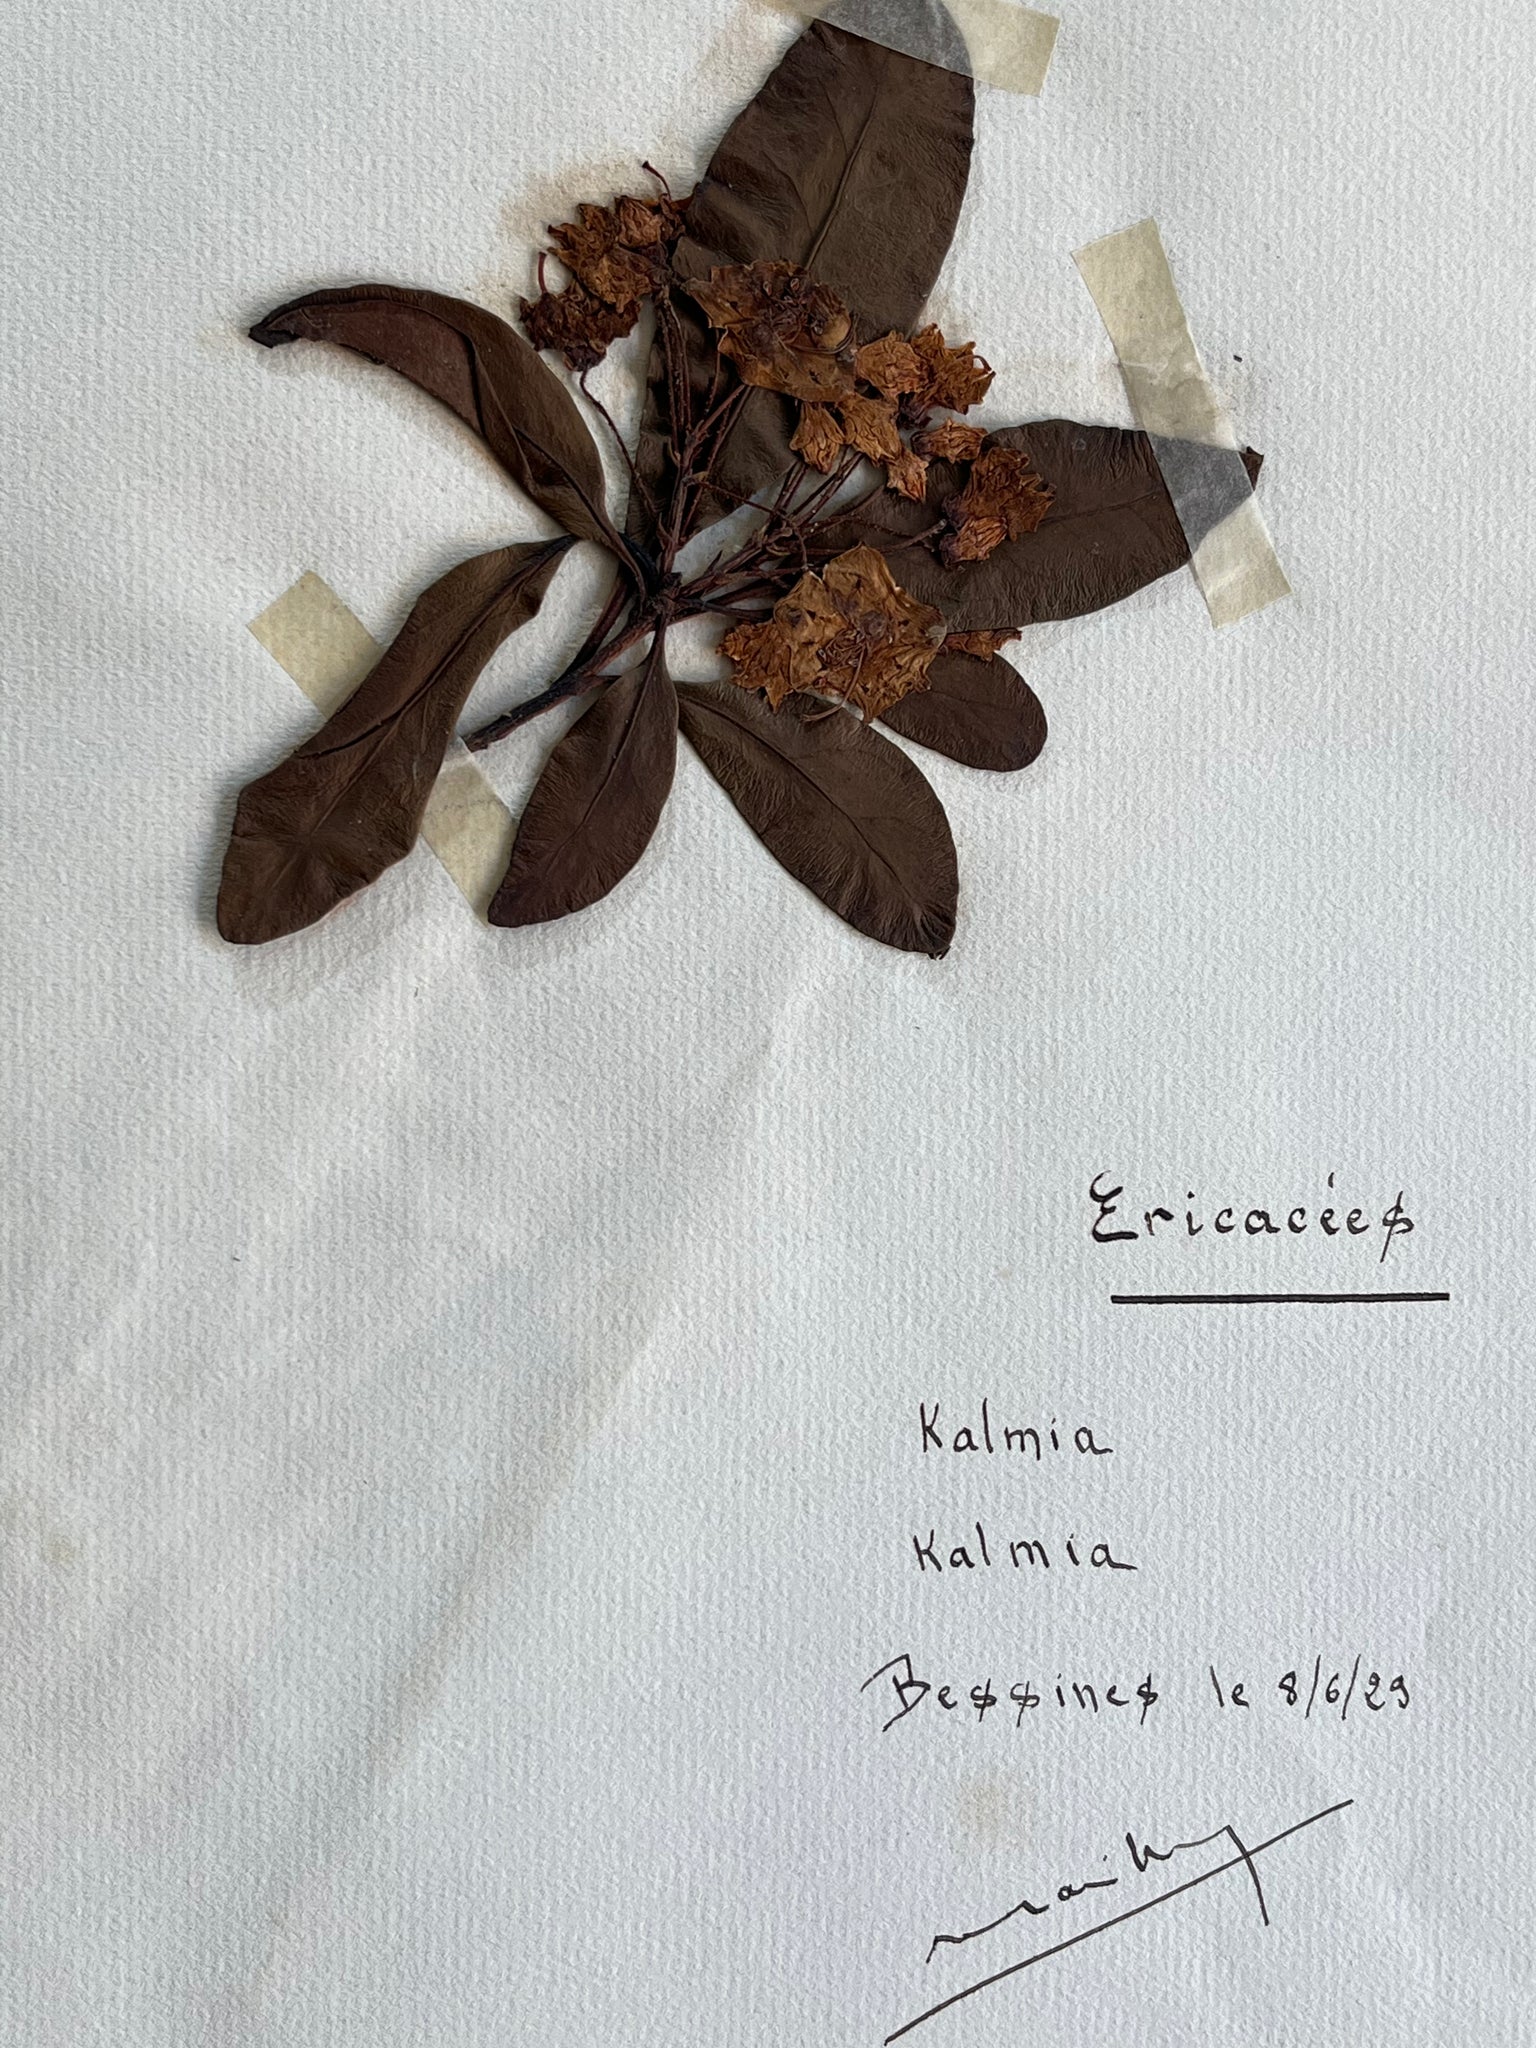 Set Botanical specimens